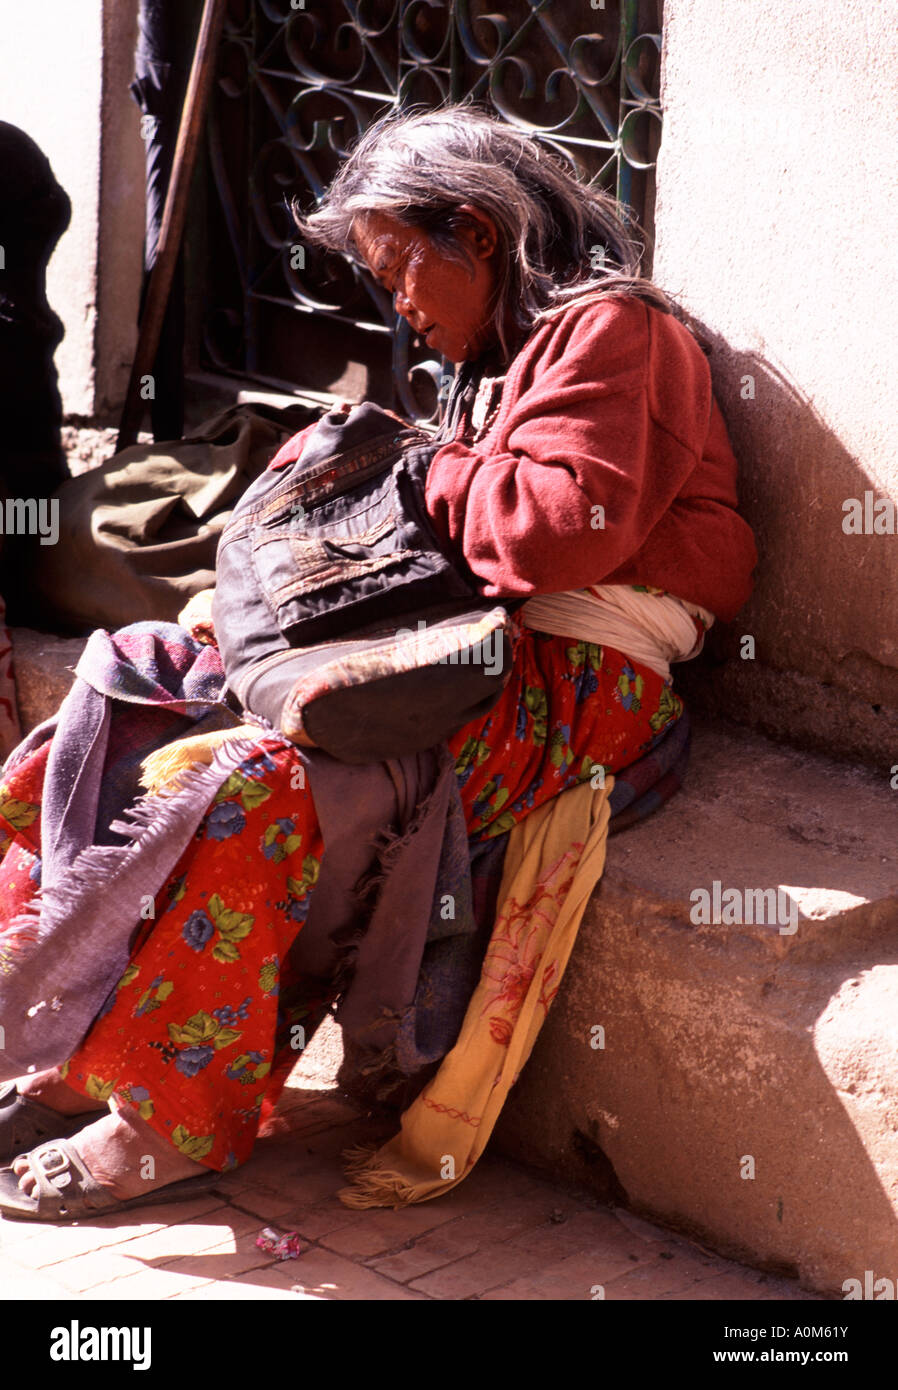 Destitute woman in Nepal. Stock Photo